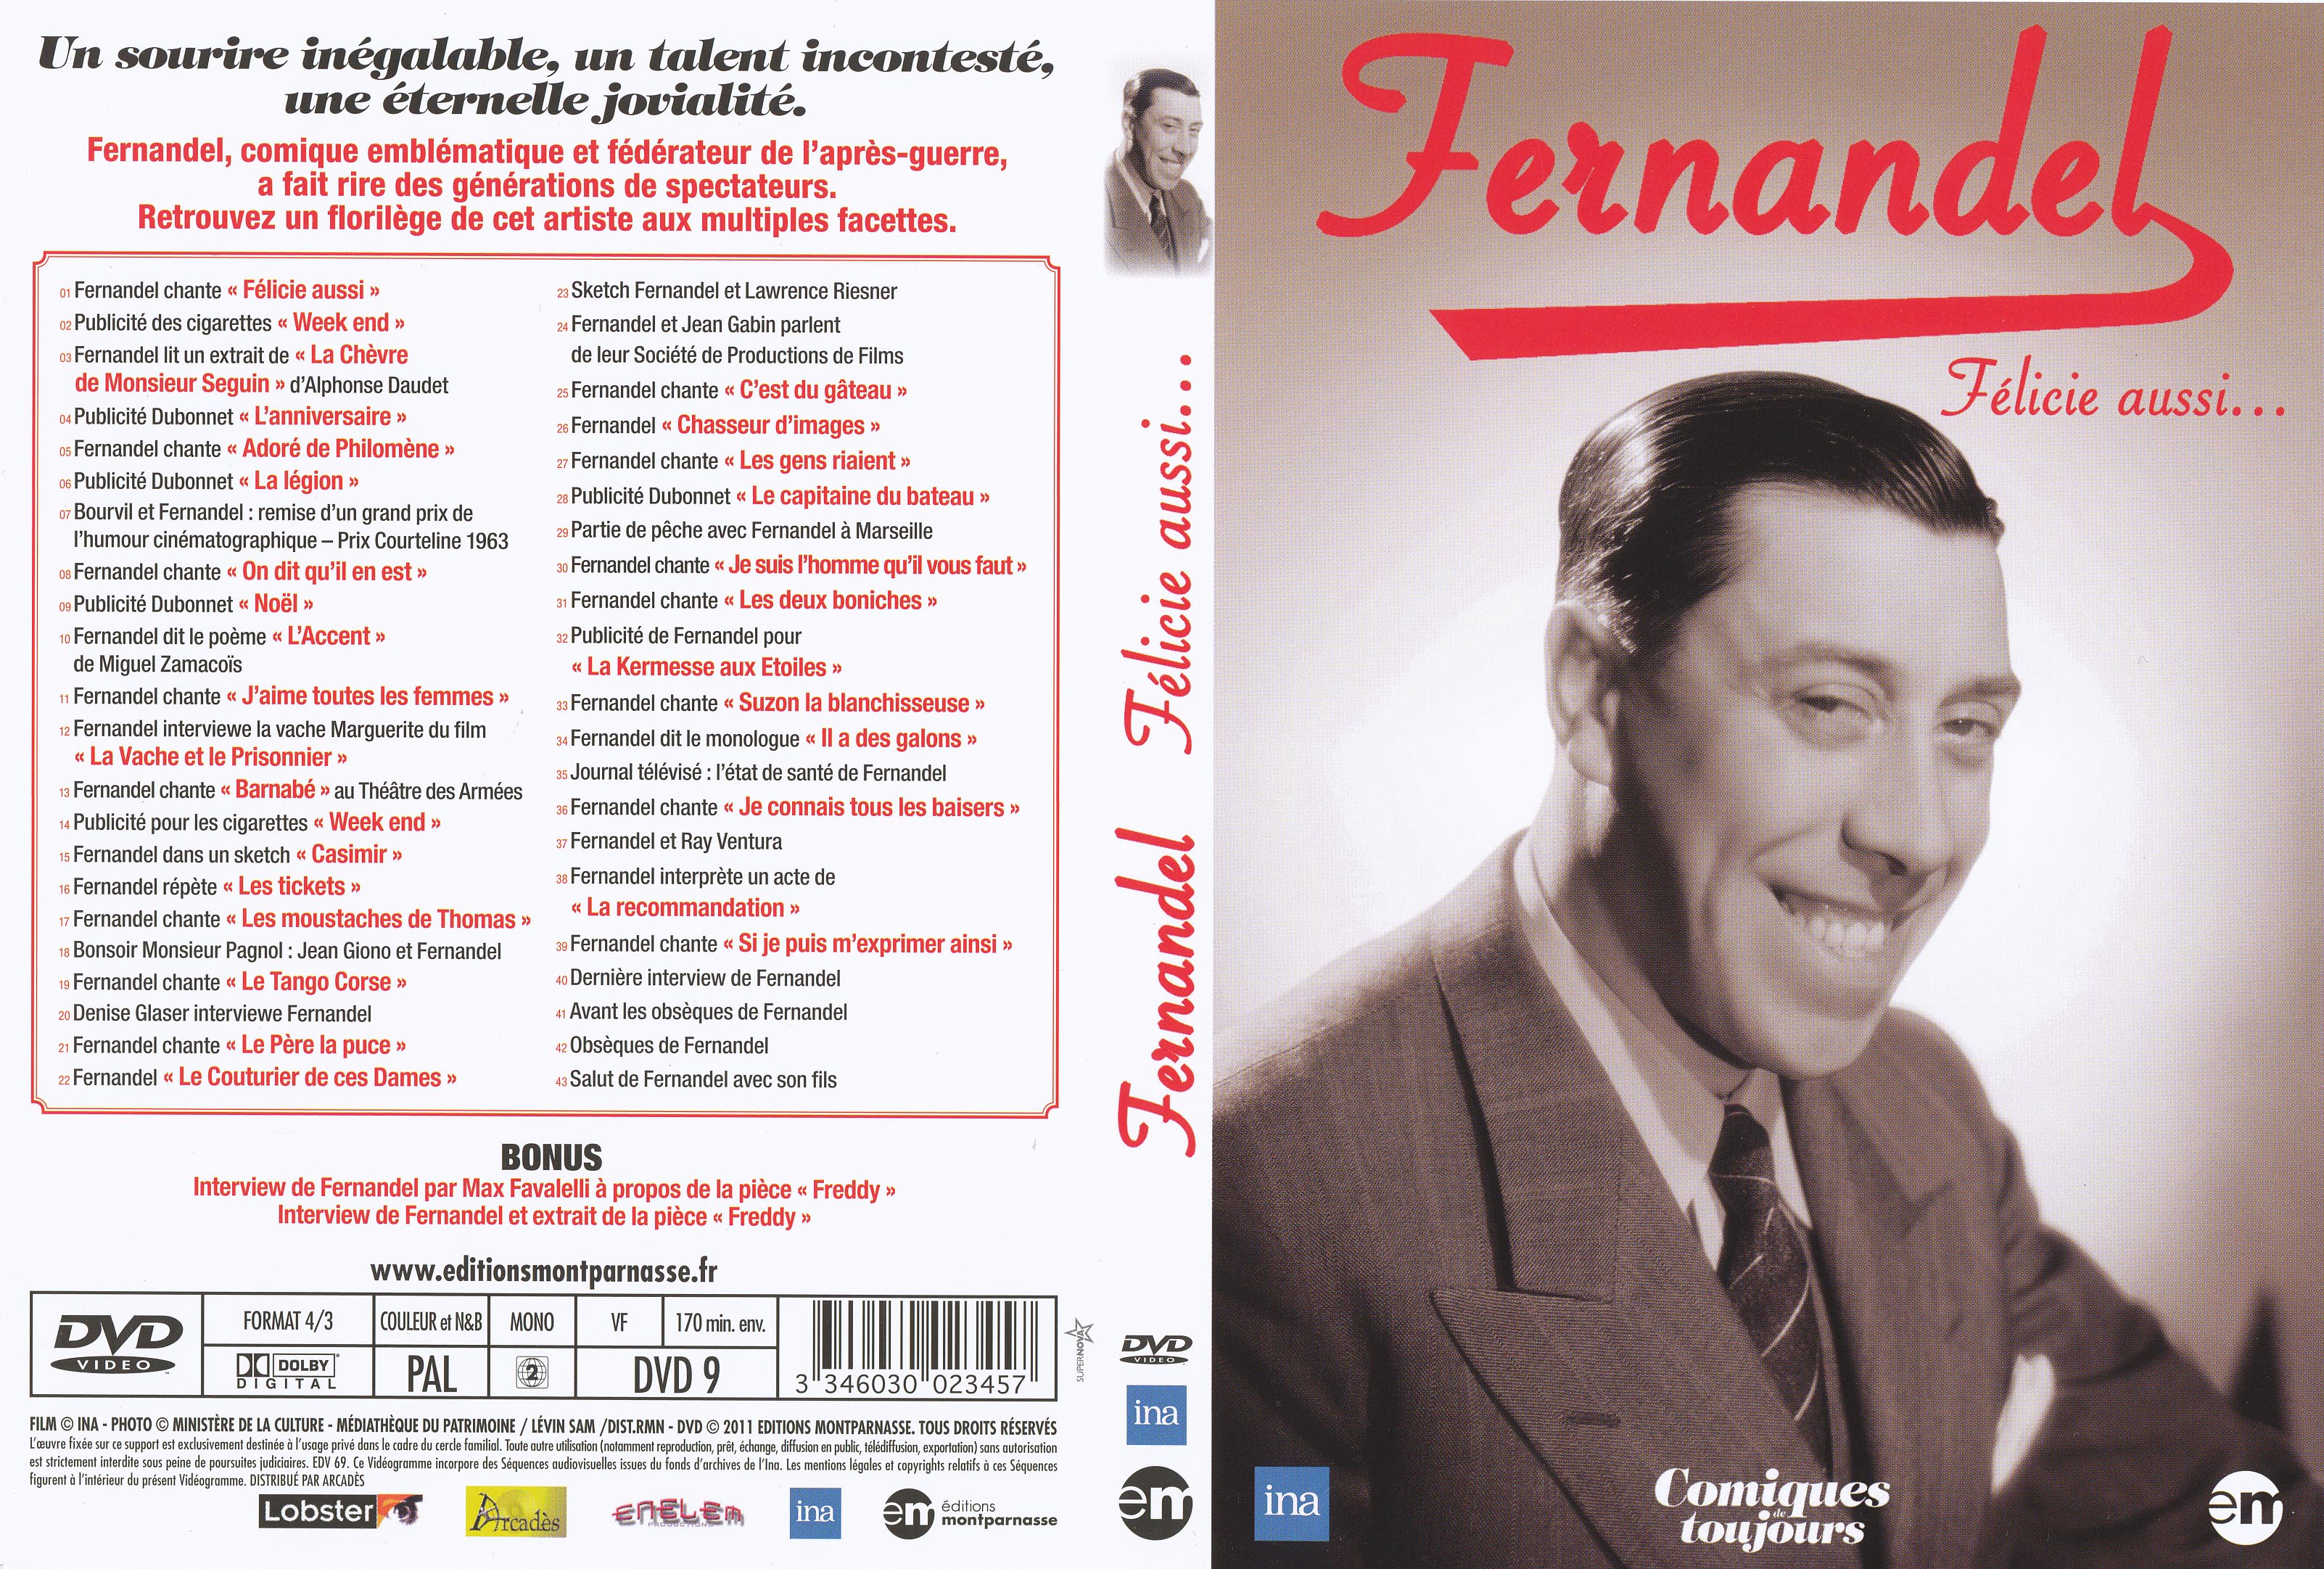 Jaquette DVD Fernandel Felicie aussi